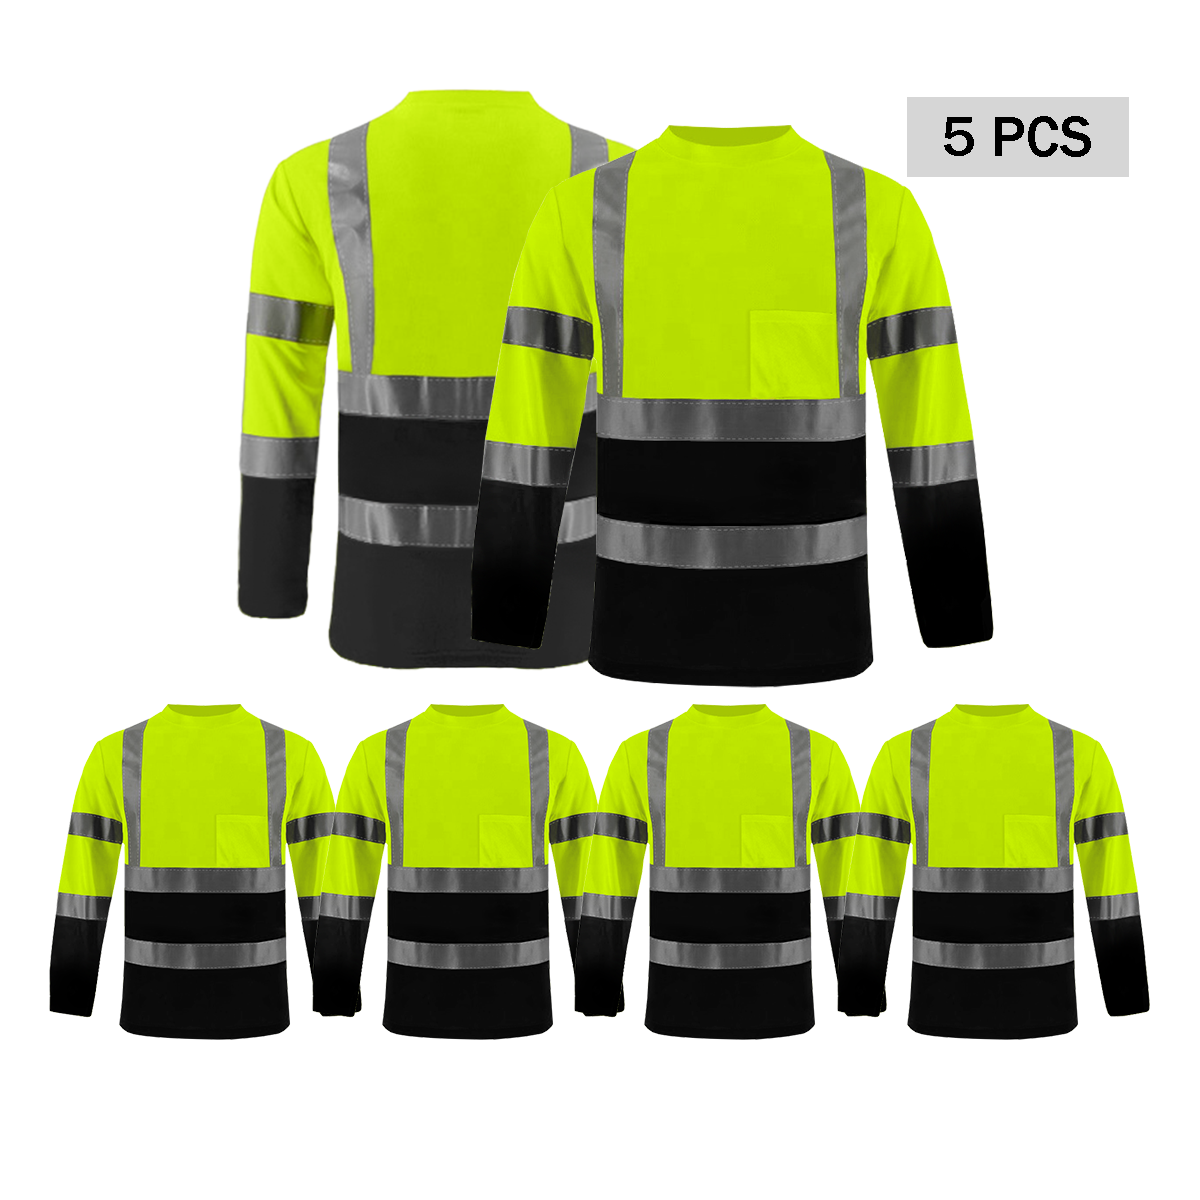 Custom LOGO Reflective Shirts Long Sleeve Yellow and Black Class 3 High Visibility Shirts Reflective Shirts with Pocket Safety Shirt